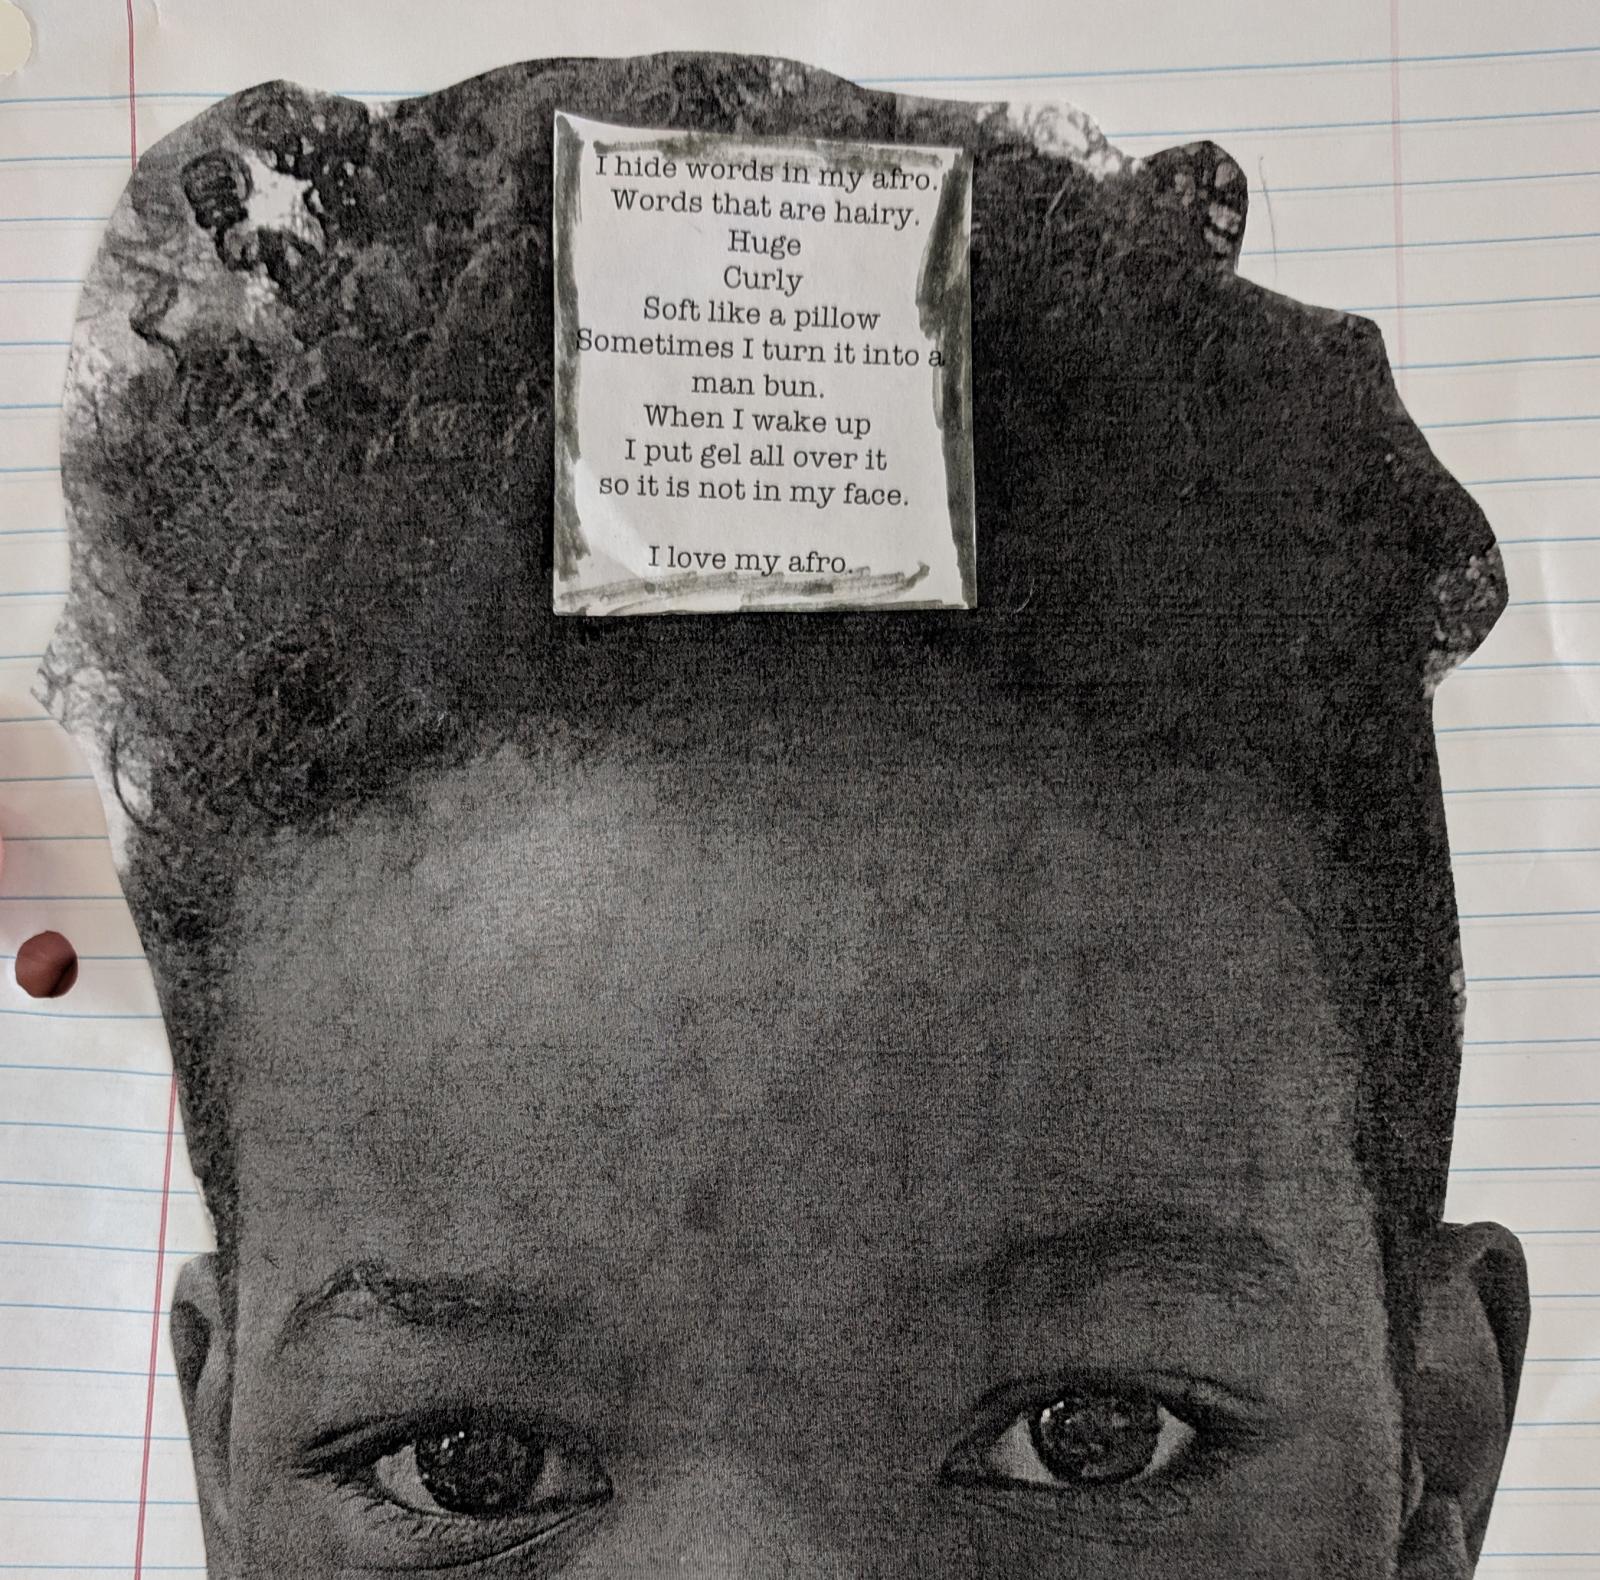 3rd Grade student poem, Northfield Elementary School, Ellicott City, MD

Mentor poem: "Words in My Pillow" by Naomi Shihab Nye